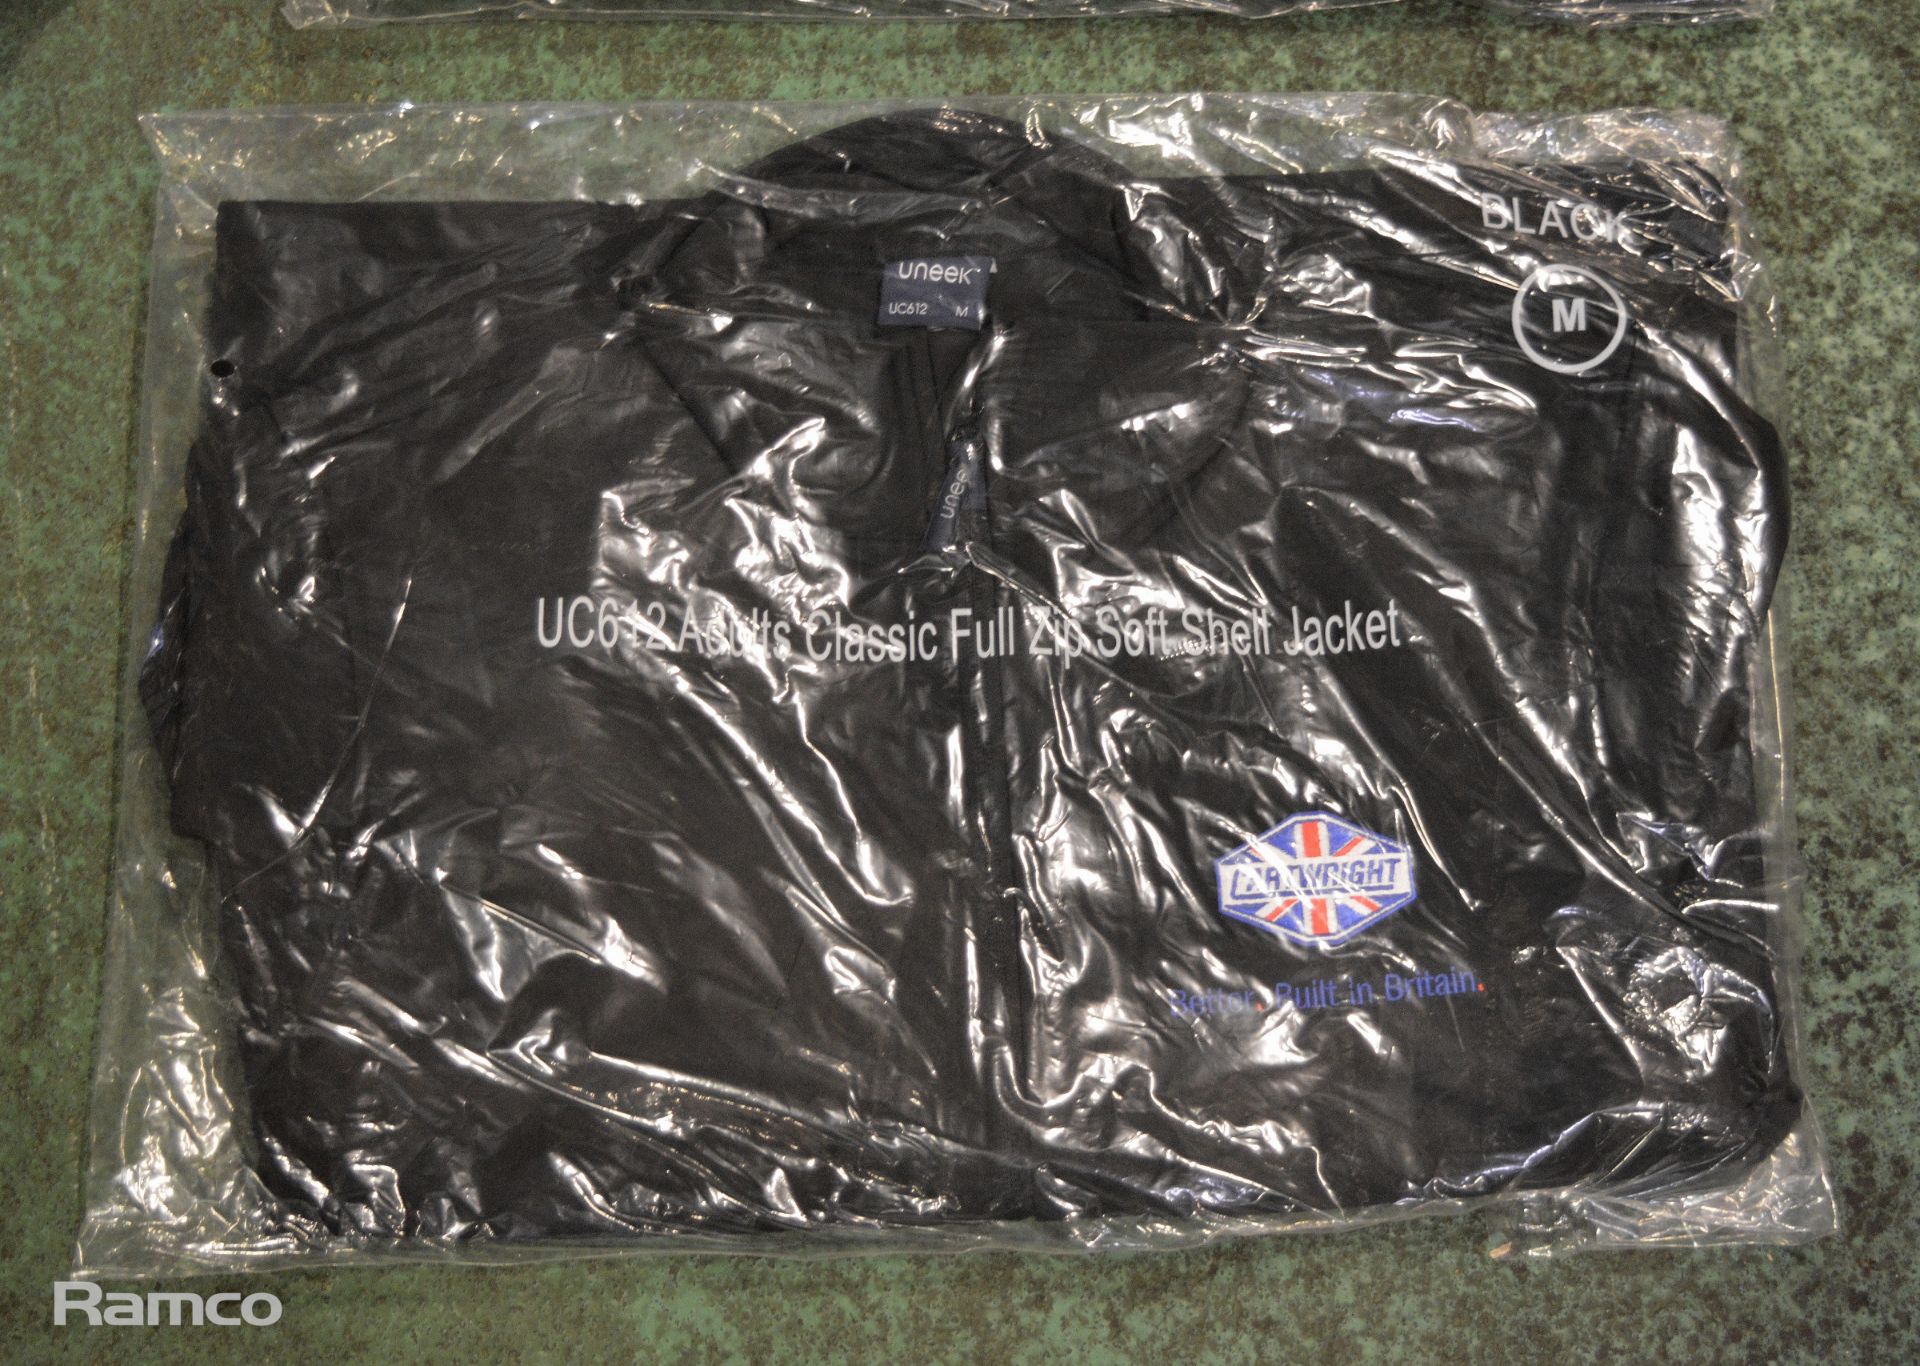 13x Cartwright branded soft shell jackets - medium - Image 3 of 4